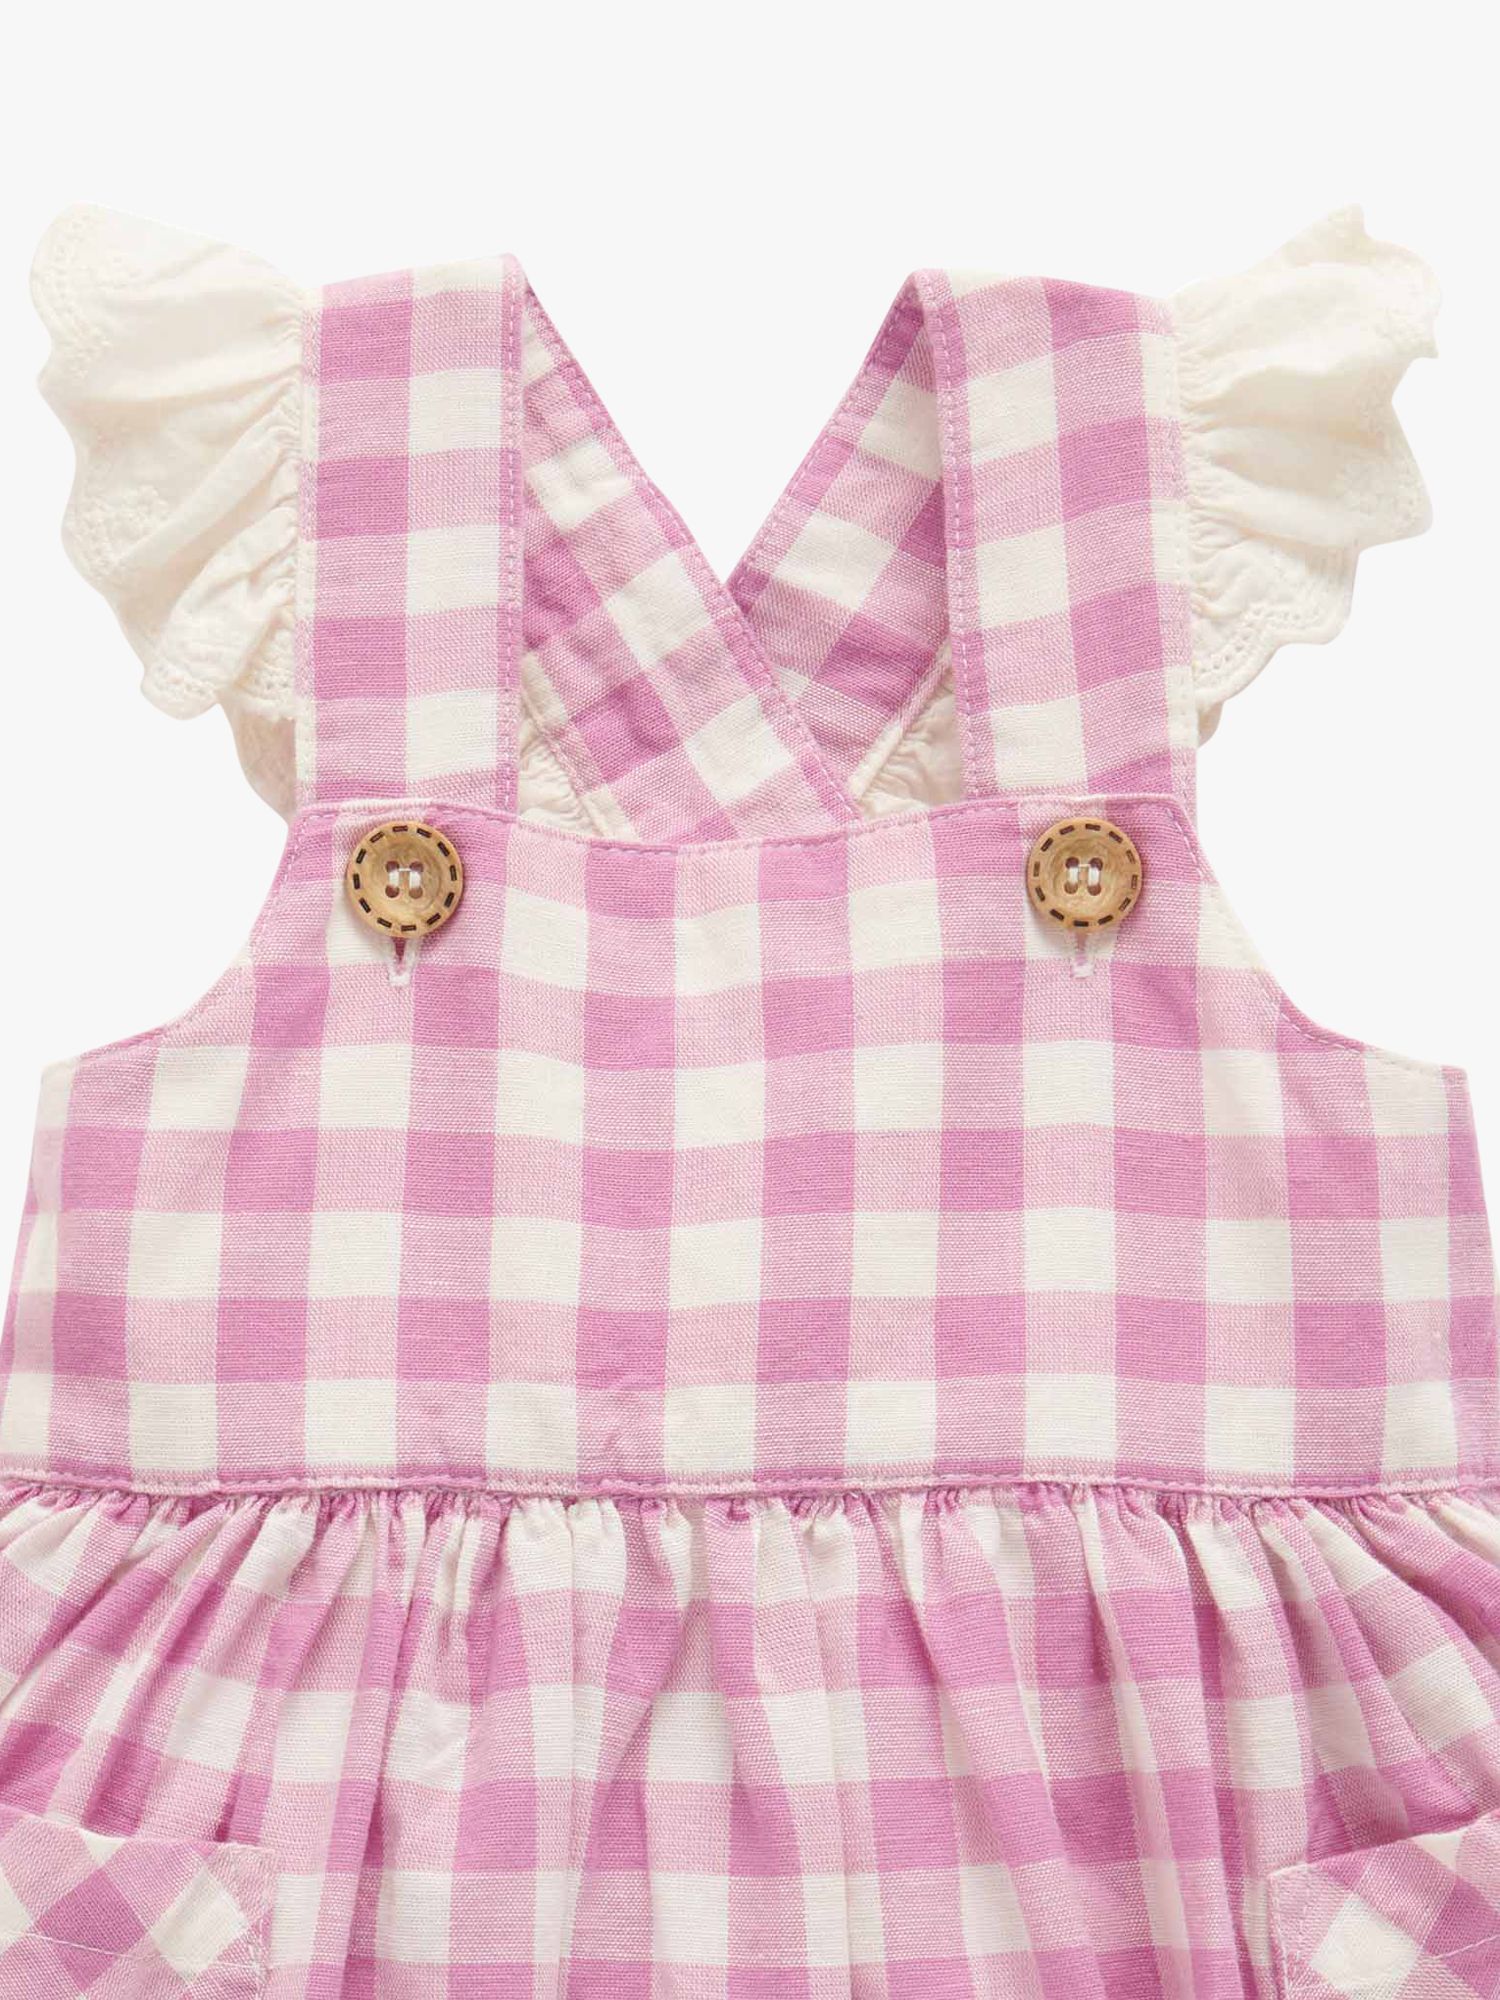 Purebaby Baby Organic Cotton Blend Gingham Pinafore Dress, Pink, 3-6 months